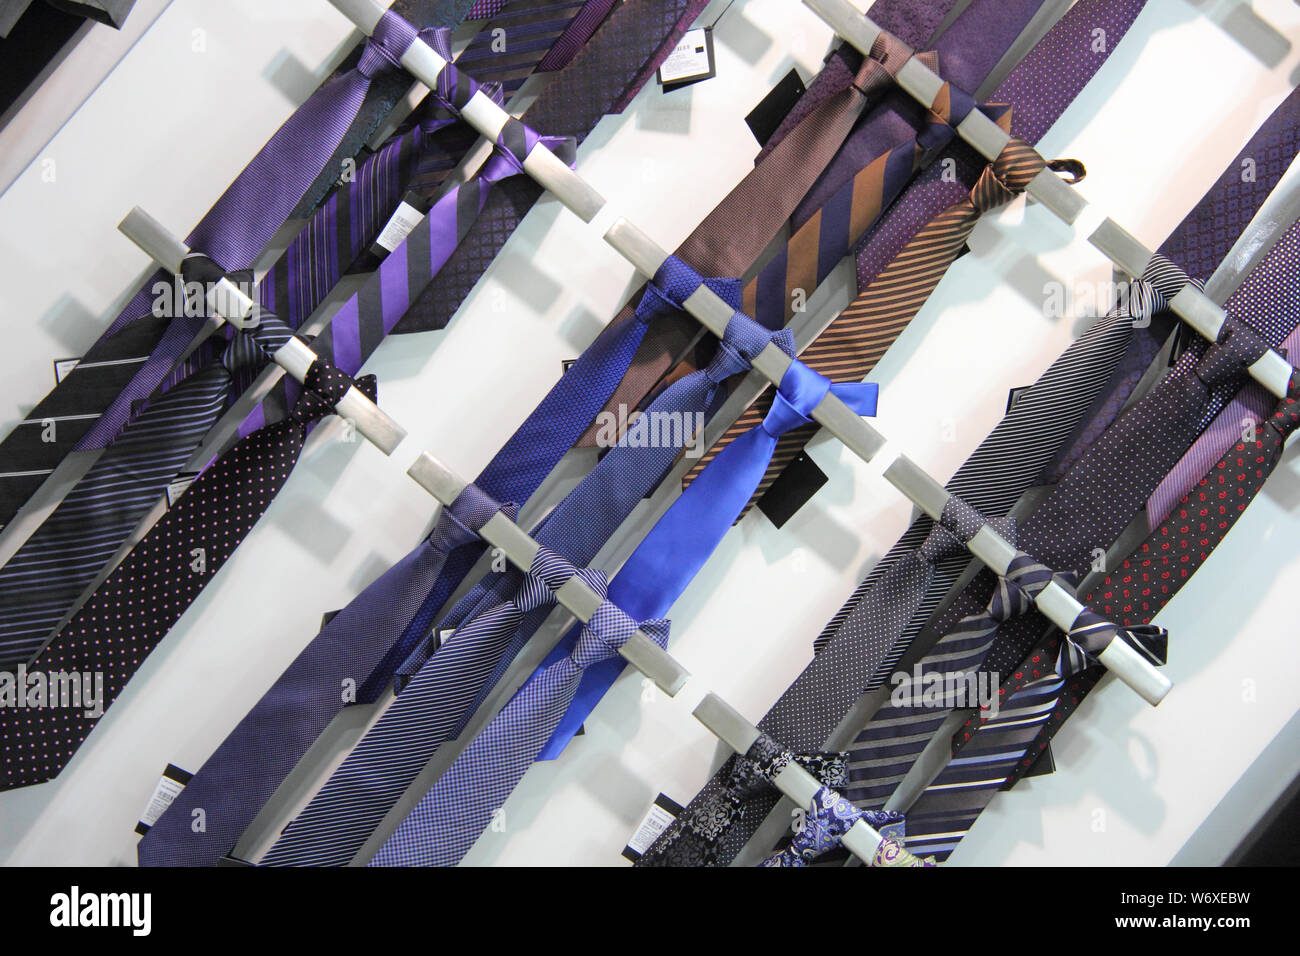 Assortiments de cravates en magasin Banque D'Images